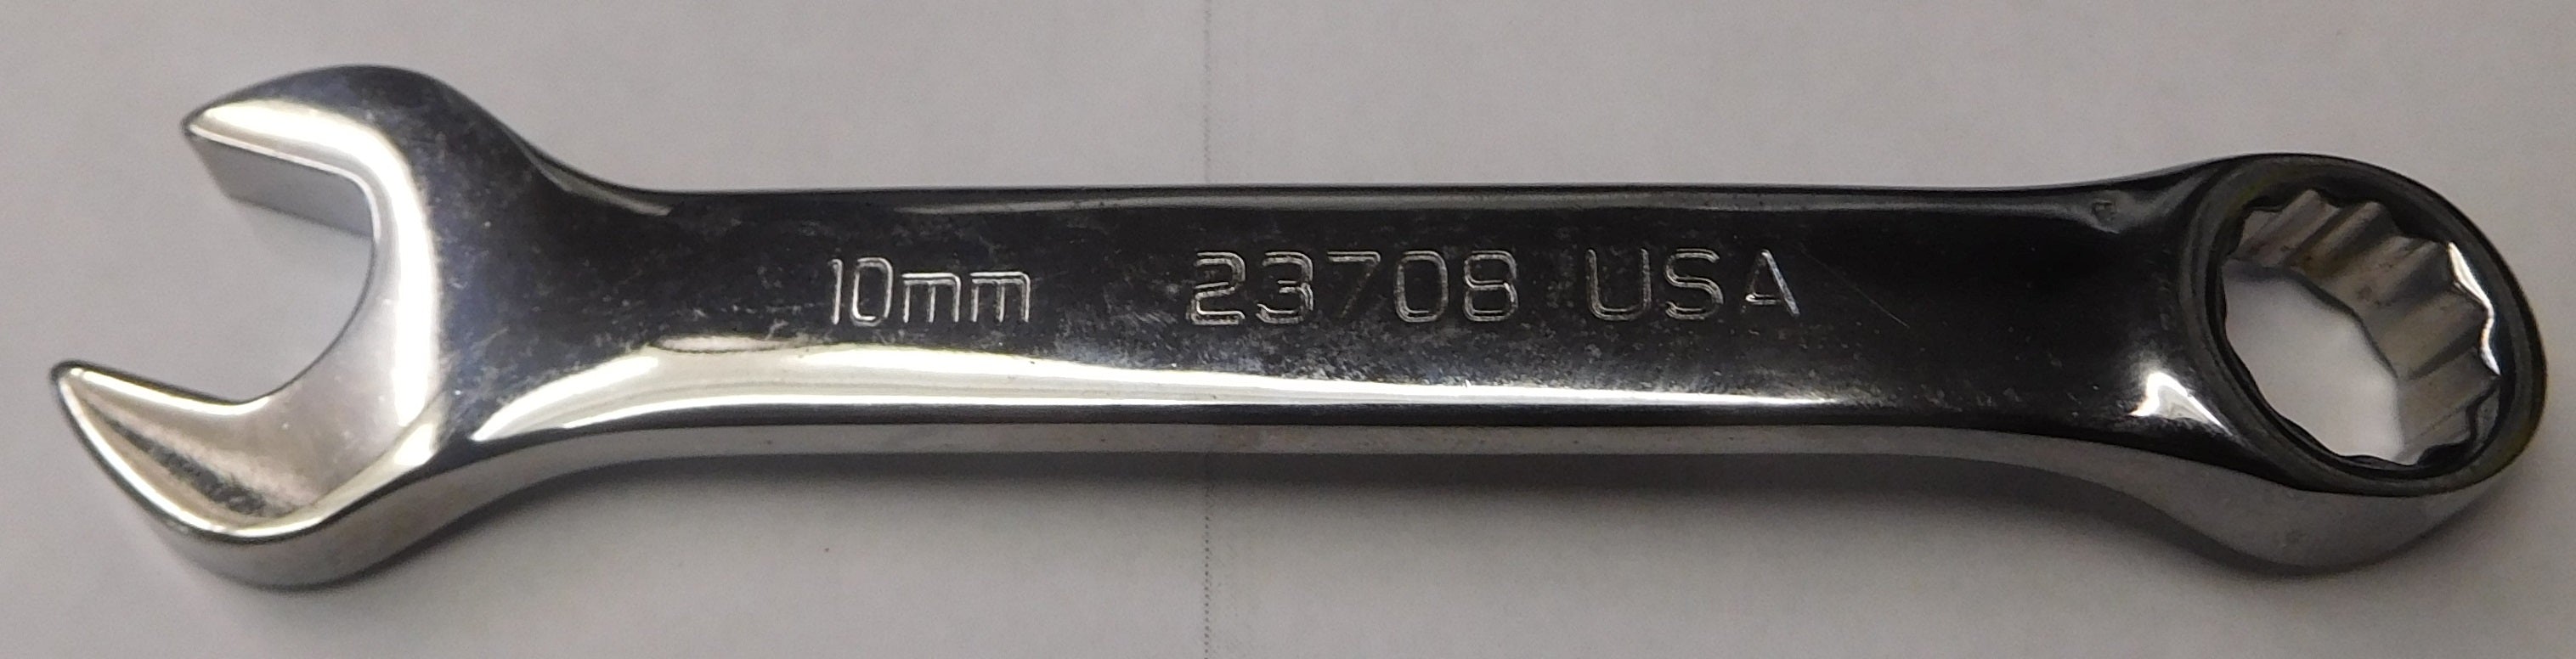 Kobalt 23708 10mm Stubby Full Polish Combination Wrench 12 Point USA